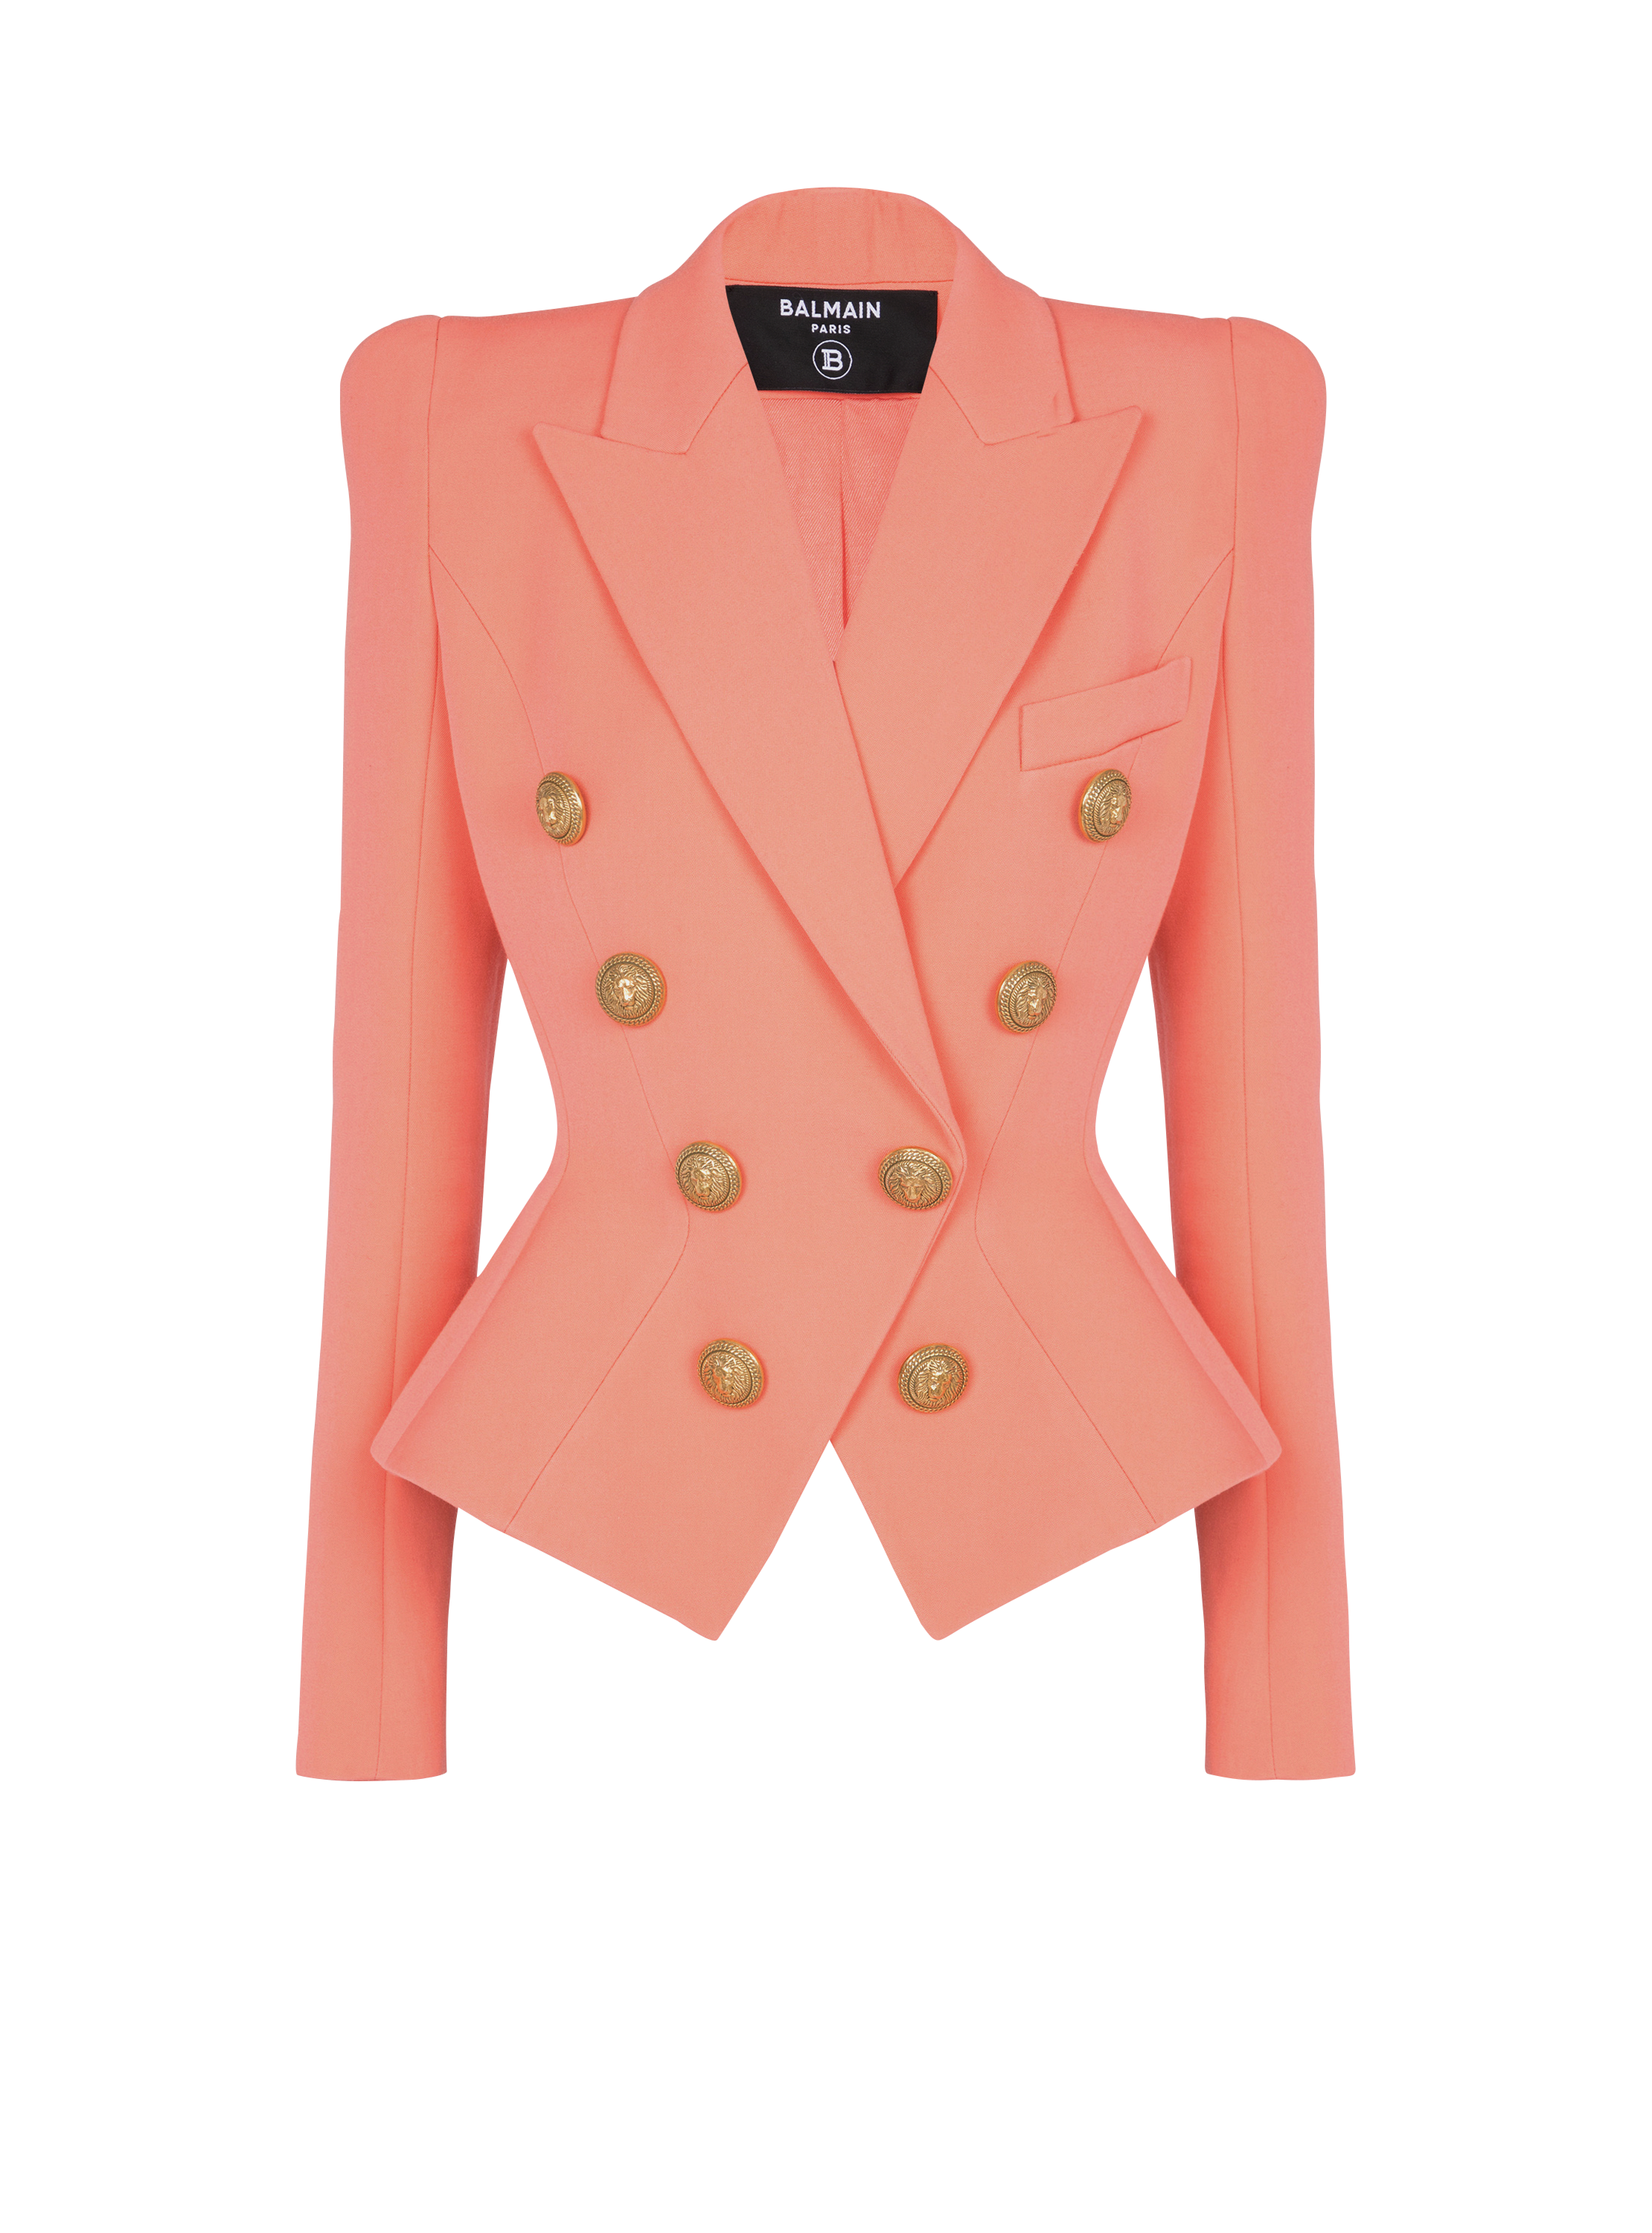 8-button cinched-waist jacket